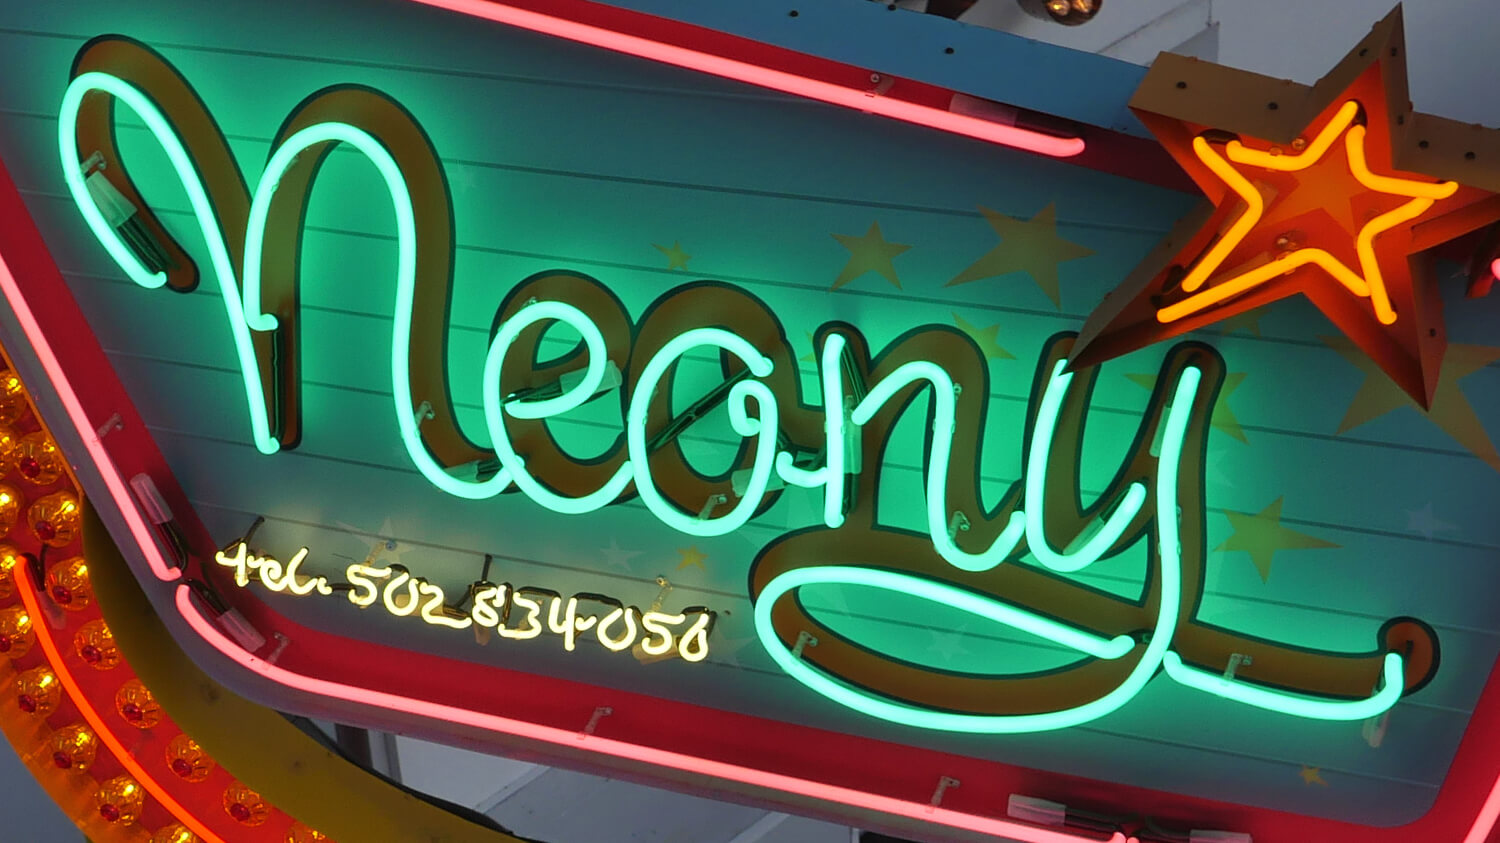 Los neones pretenden - neón-teléfono-número-neón-publicidad-carta-neón-neón-sobre-entrada-verde-estrella-neón-americana-grunwaldzka-gdansk-asiento-de-compañía